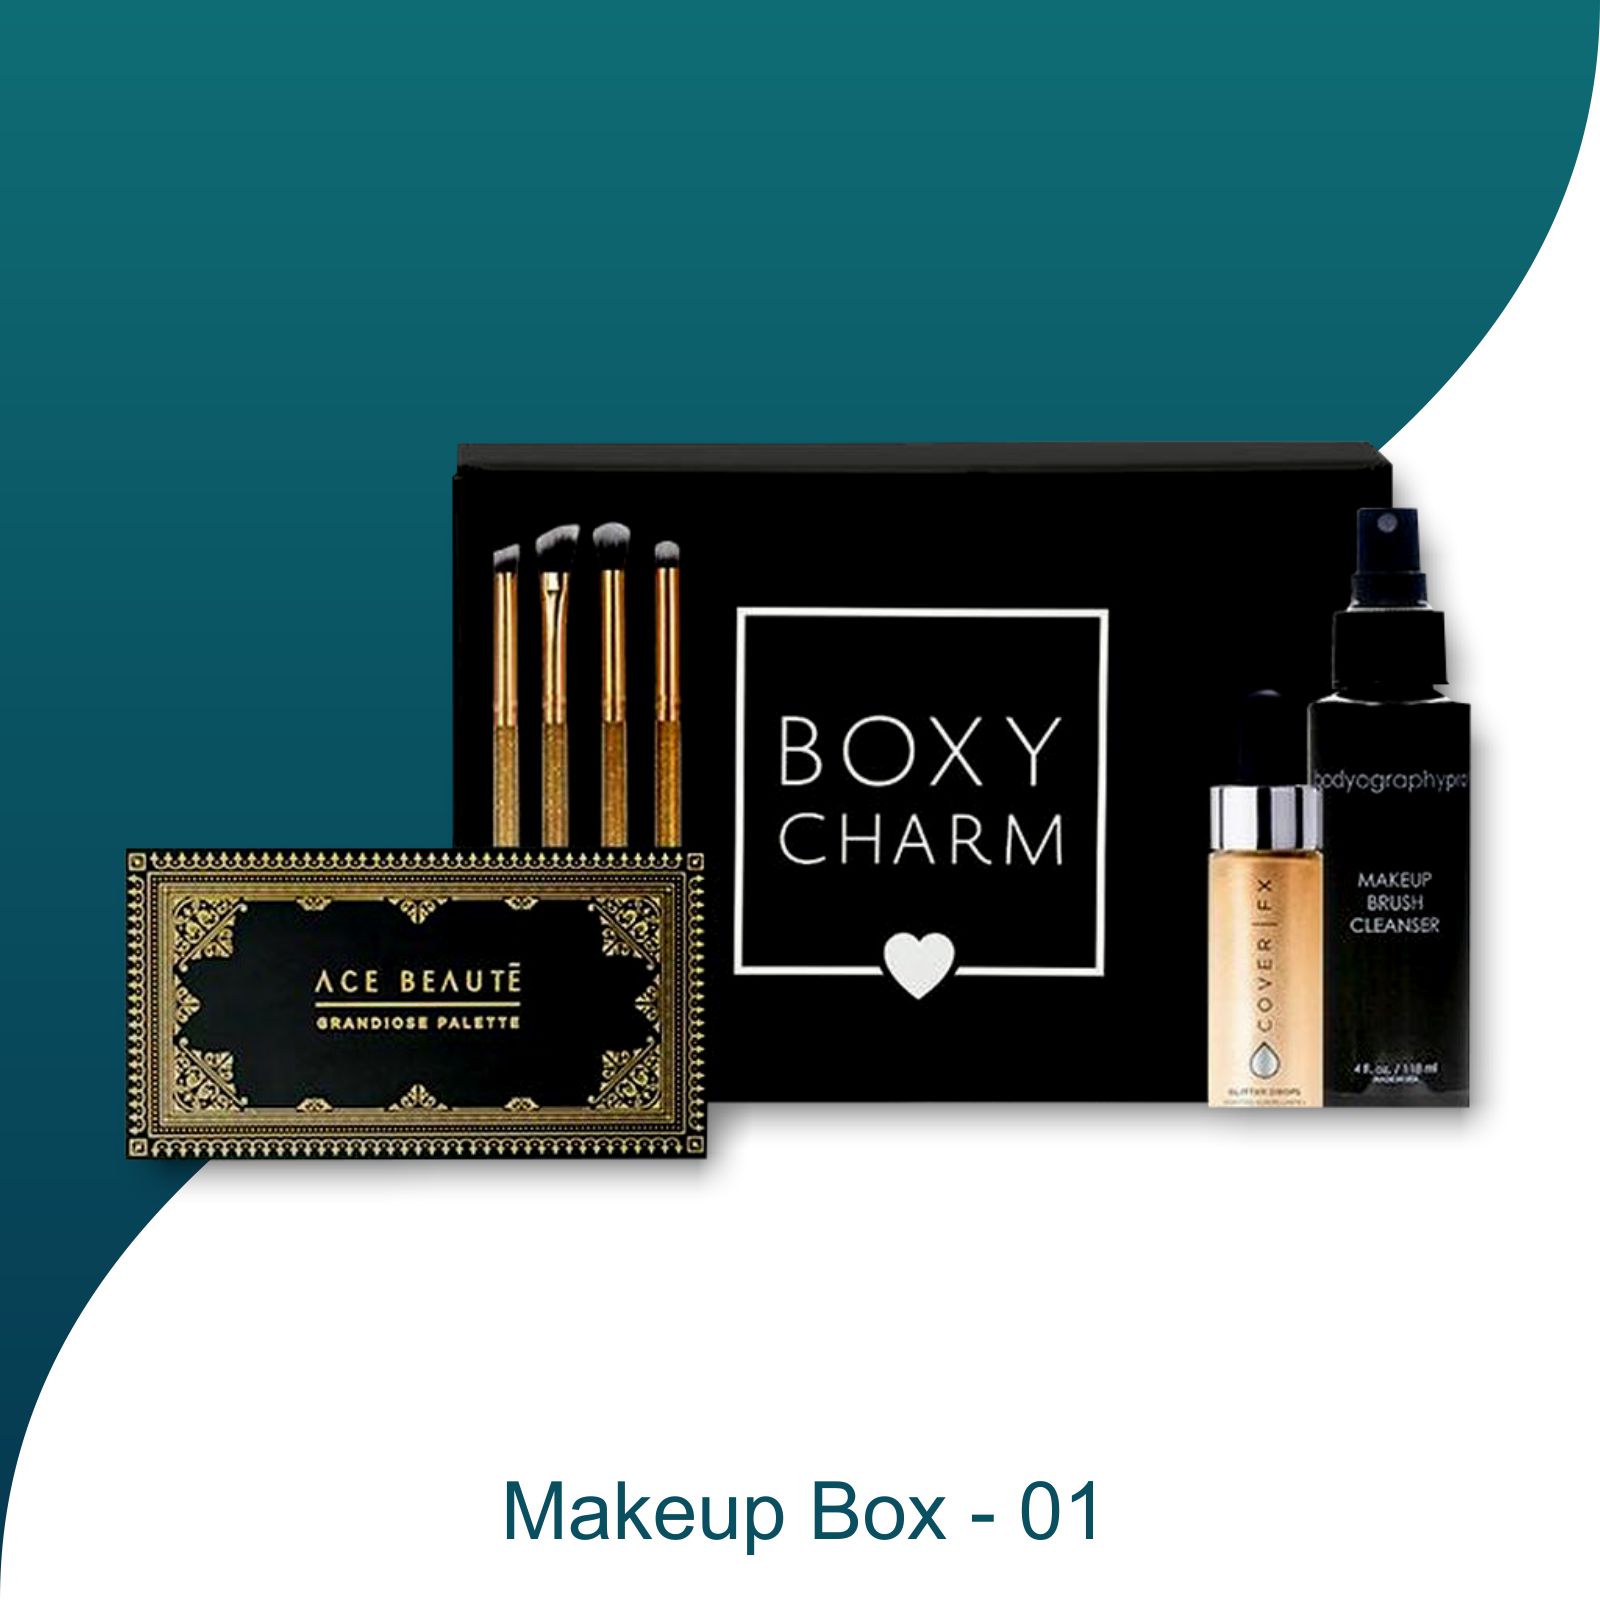 Custom Makeup boxes